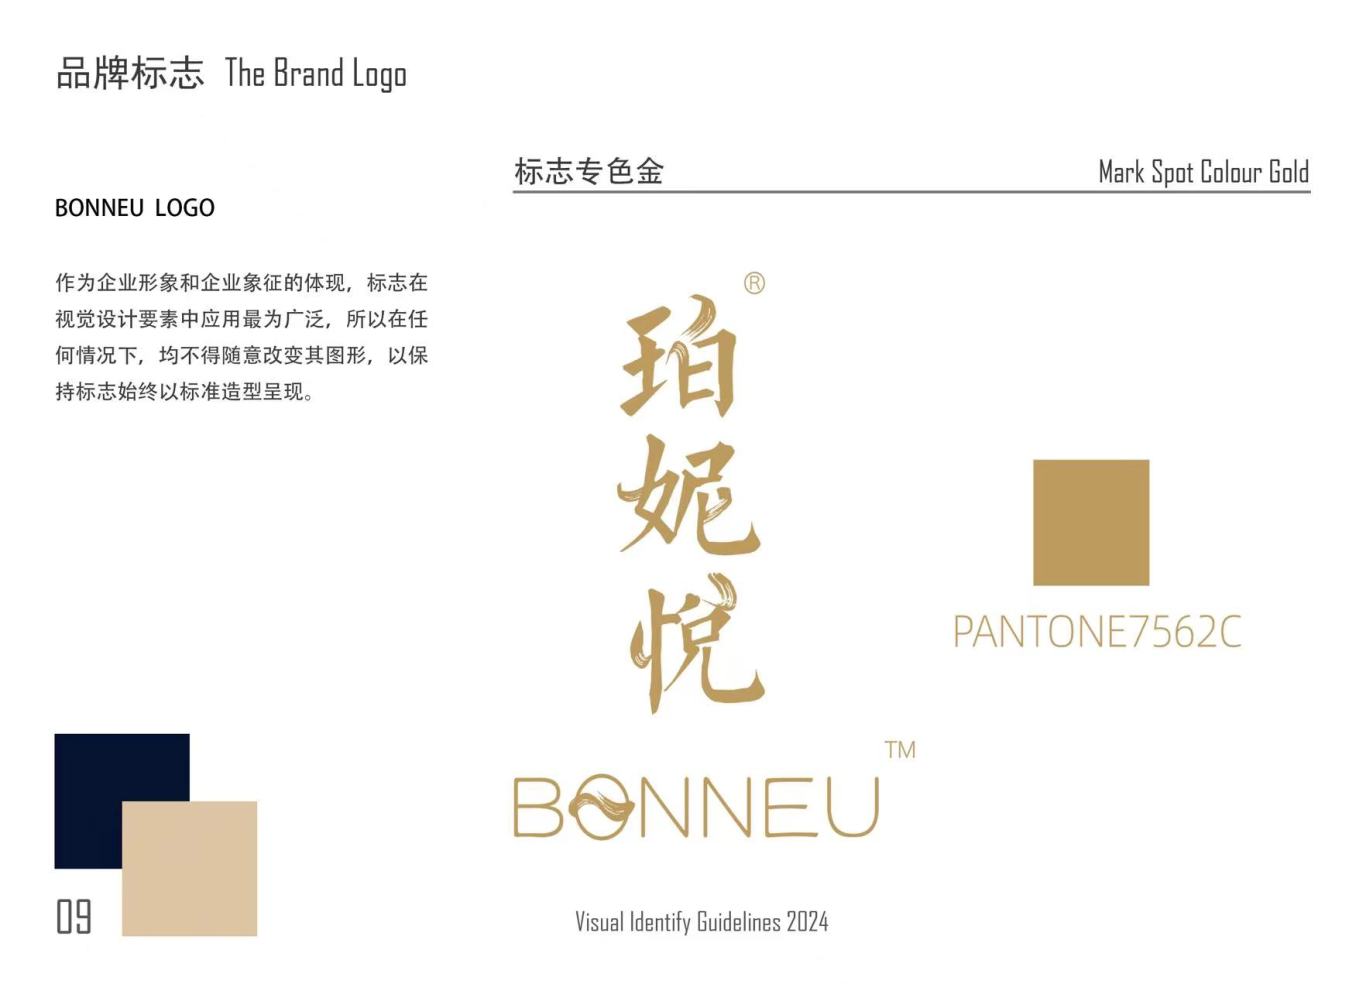 BONNEU国姿铂妮悦 民族护肤品牌 包装设计及品牌策划图8